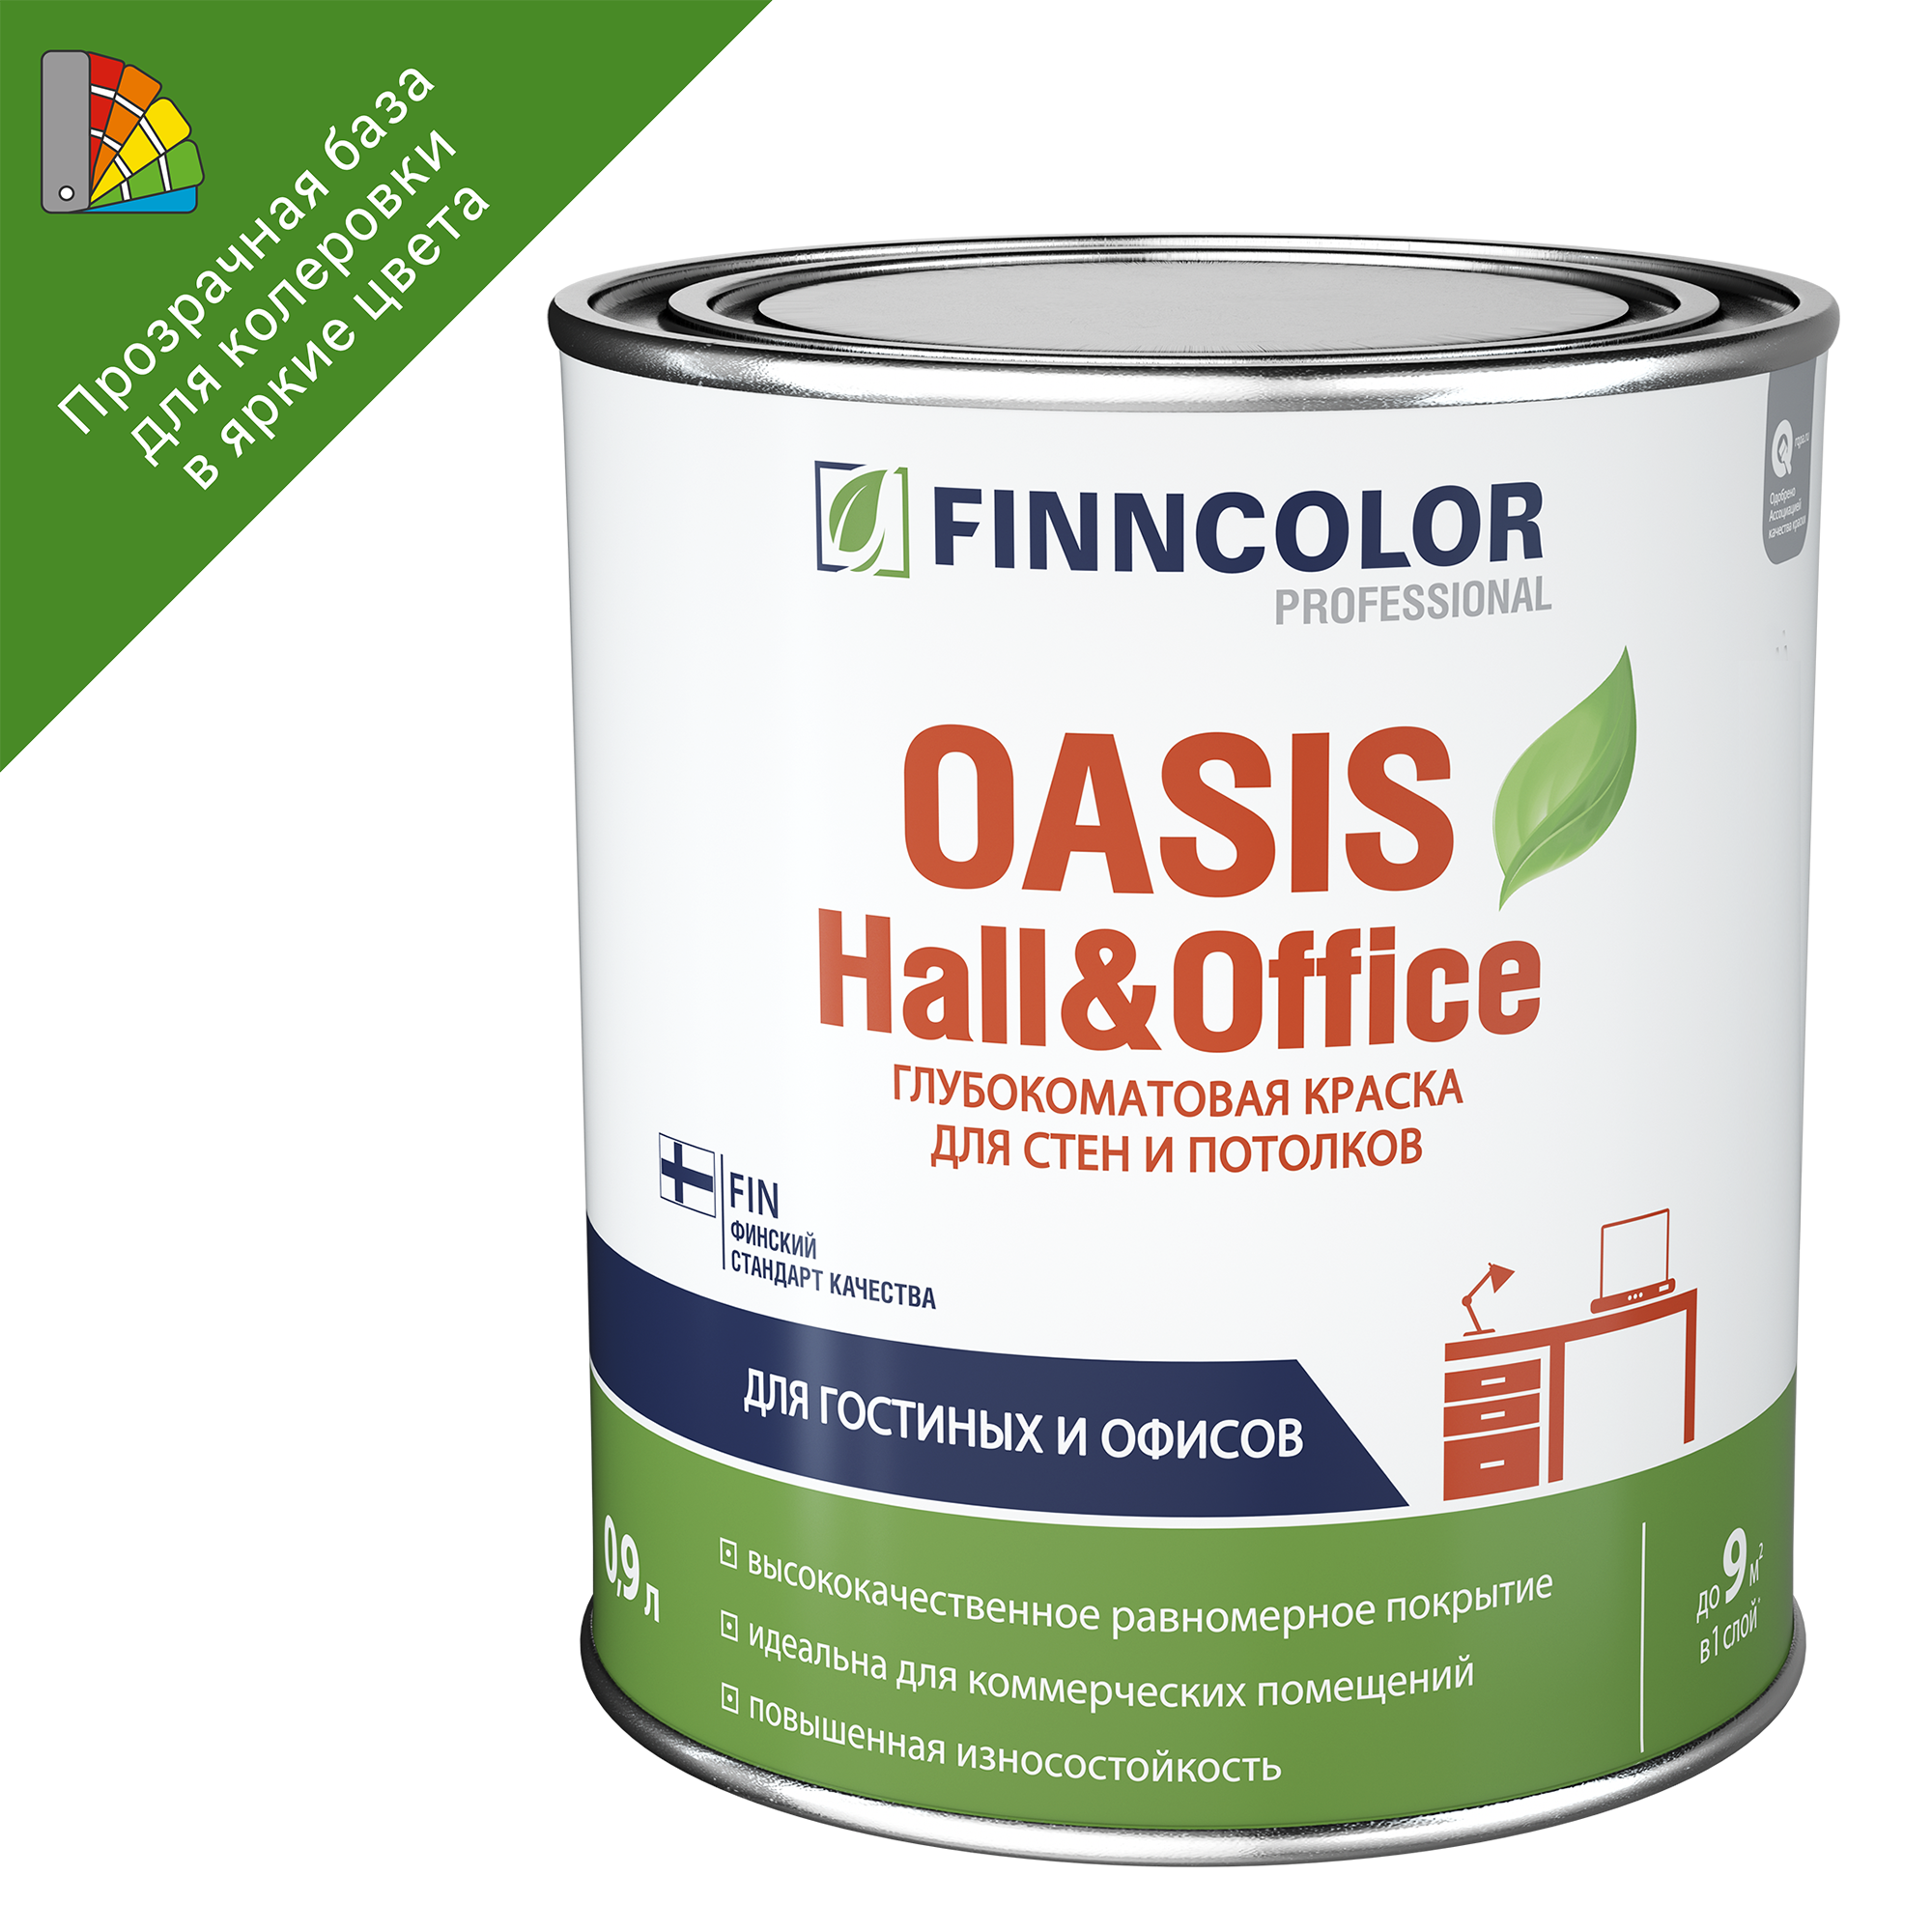 Hall office краска. Краска для стен и потолков Finncolor Oasis Hall&Office глубокоматовая, база c, 2.7л. Oasis Hall Office краска для стен и потолков. Оазис Холл офис Финнколор.